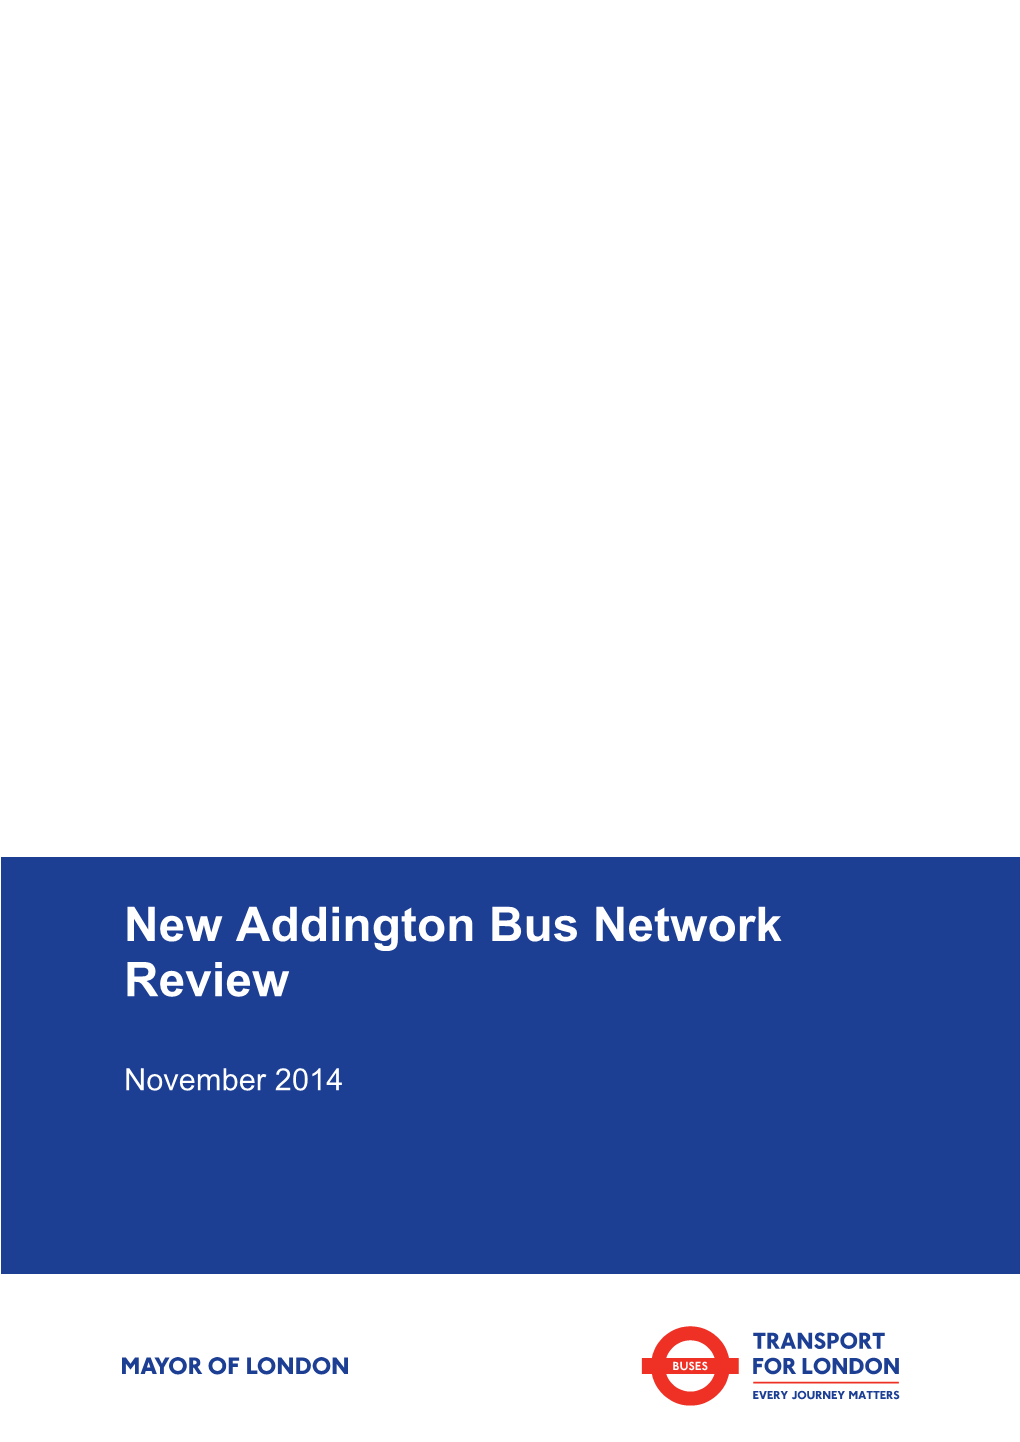 New Addington Bus Network Review